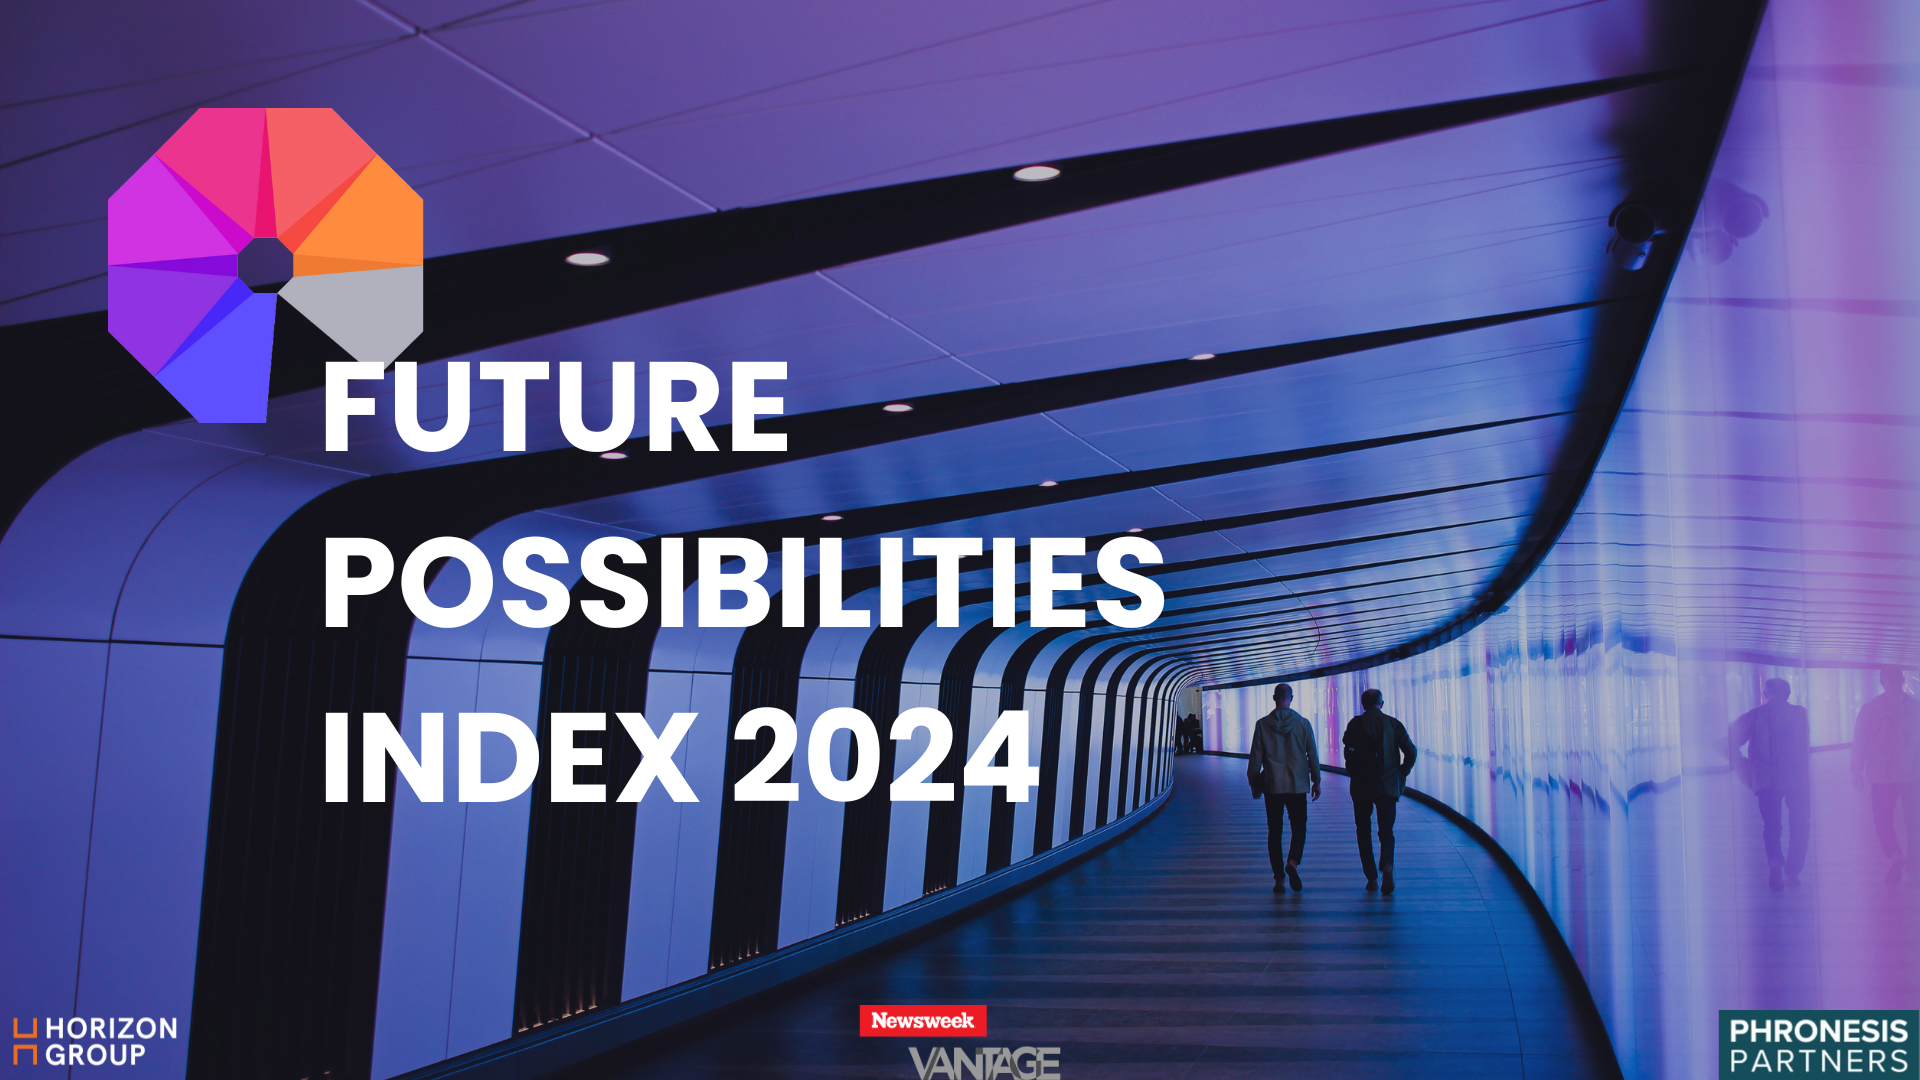 The Future Possibilities Index (FPI) 2024 presents